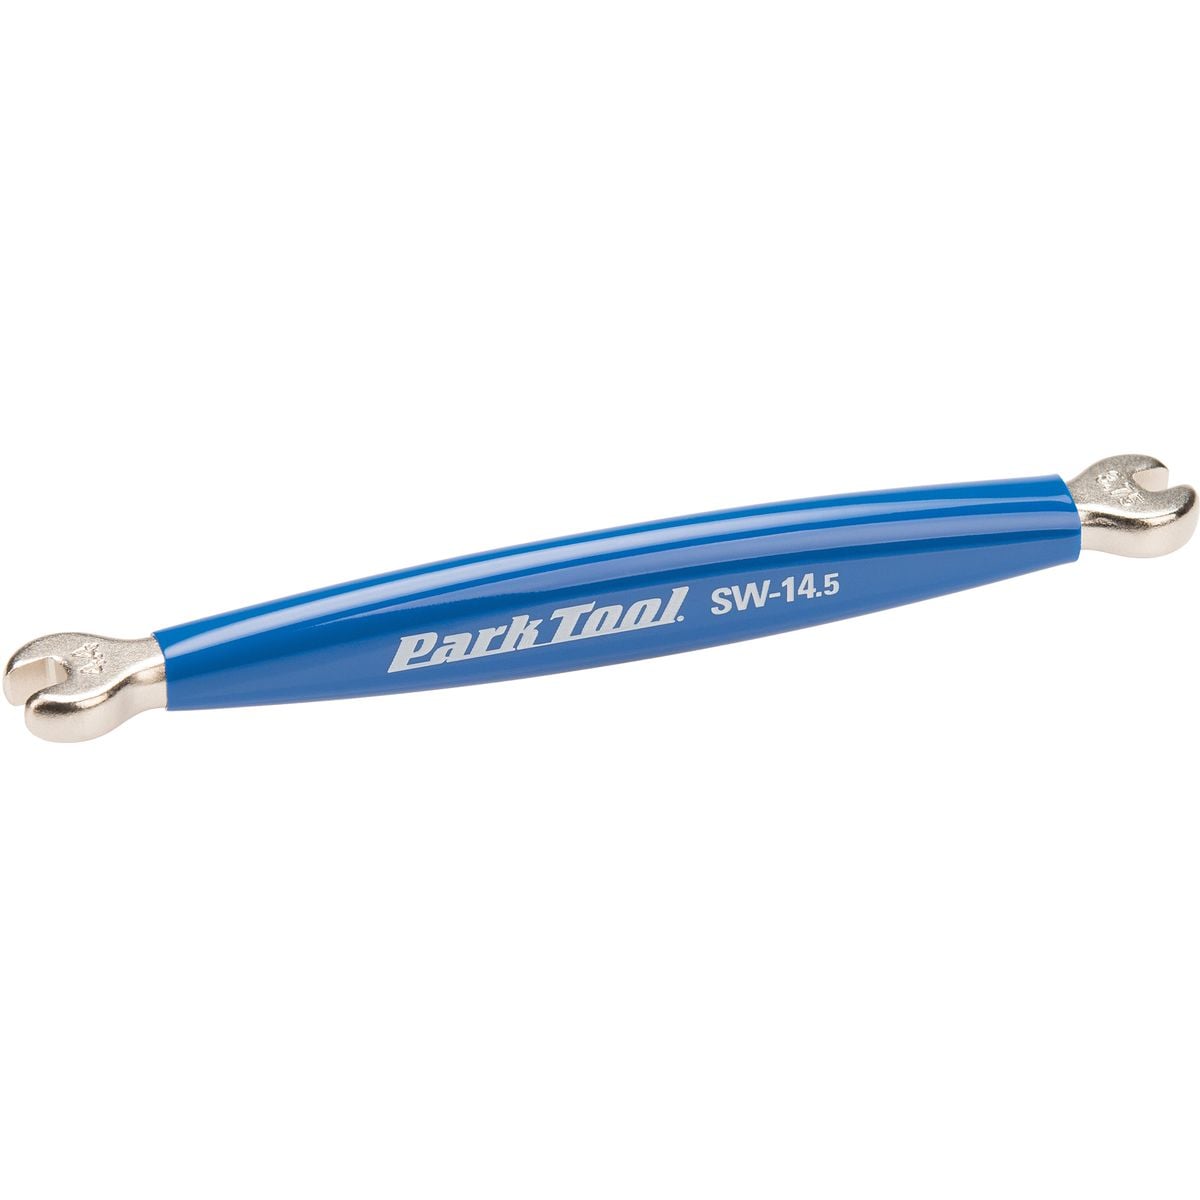 конусный ключ park tool scw 14 14мм Sw-14.5 спицеевый ключ shimano wheel systems Park Tool, синий